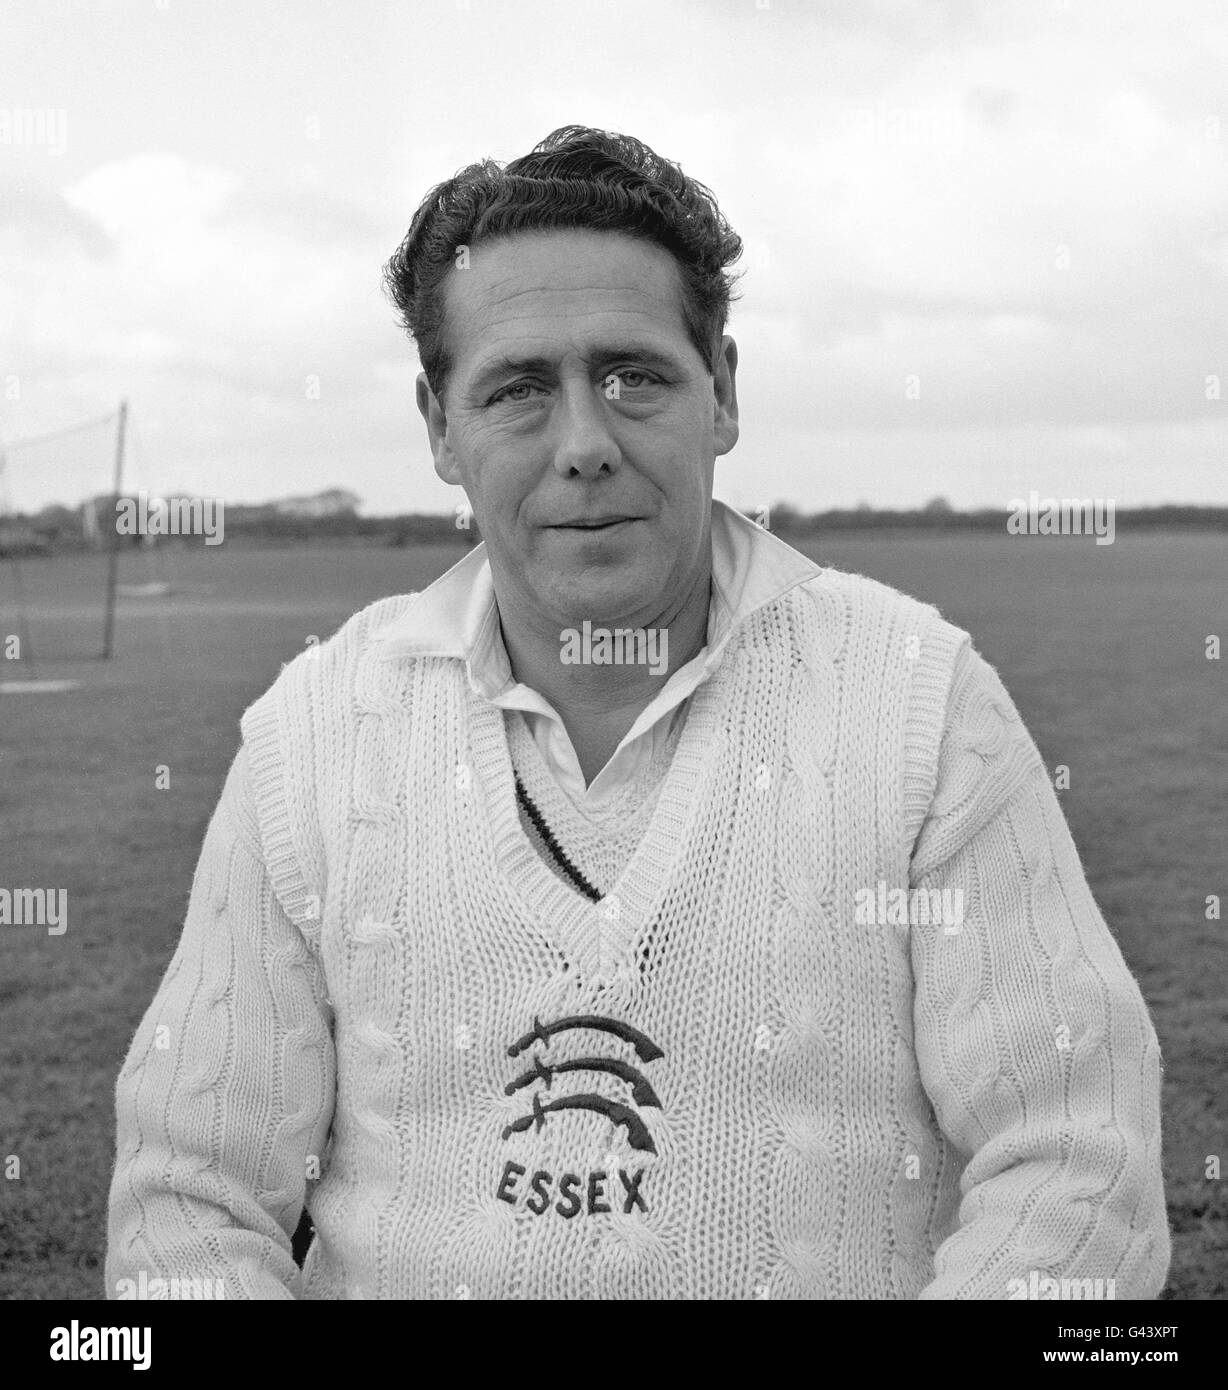 Cricket - Essex County Cricket Club - Photocall. Trevor Bailey, Essex County Cricket Club Foto Stock